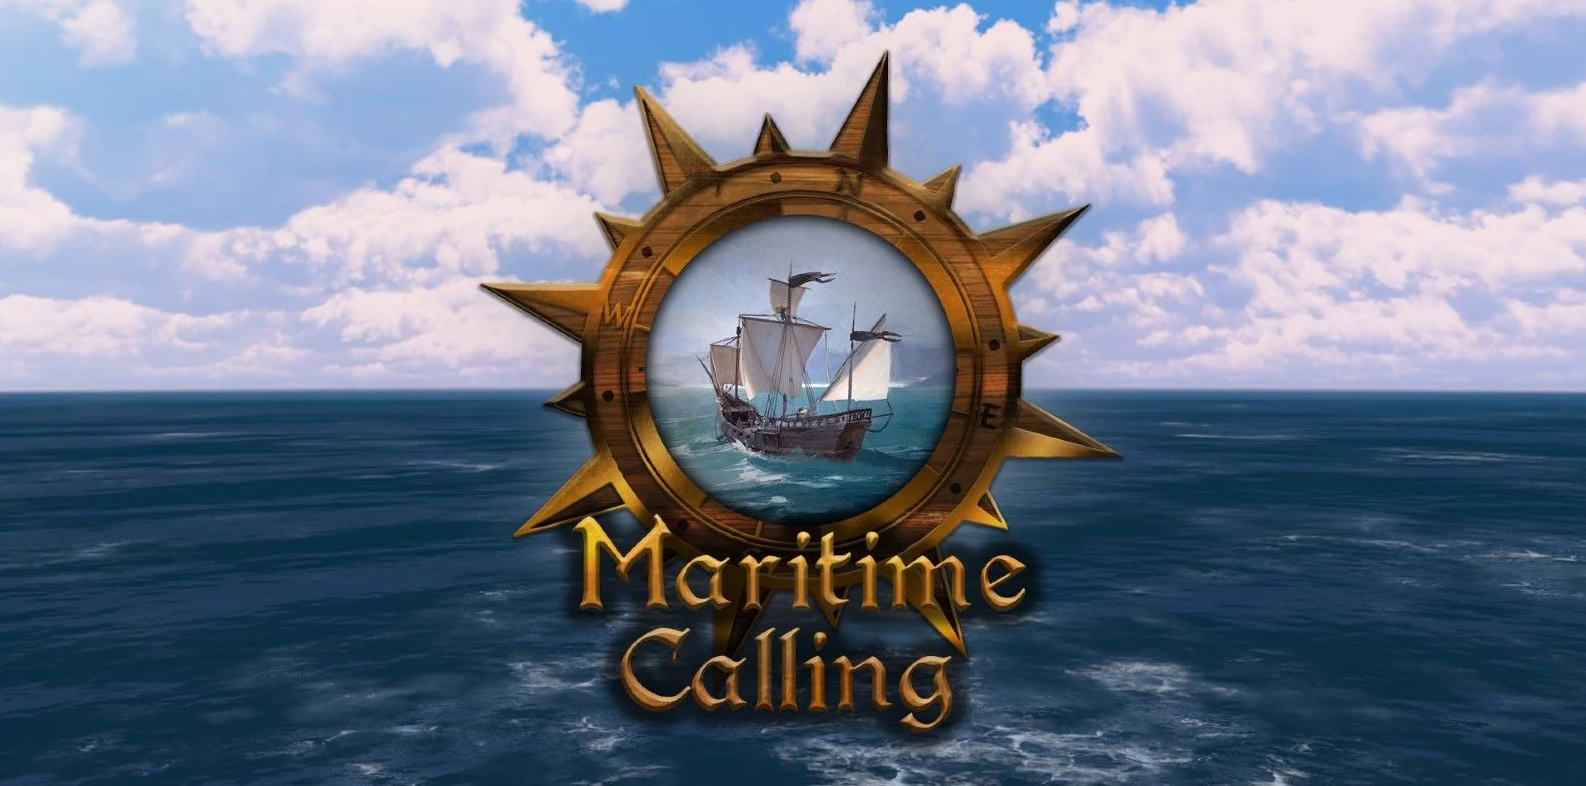 Maritime Calling free